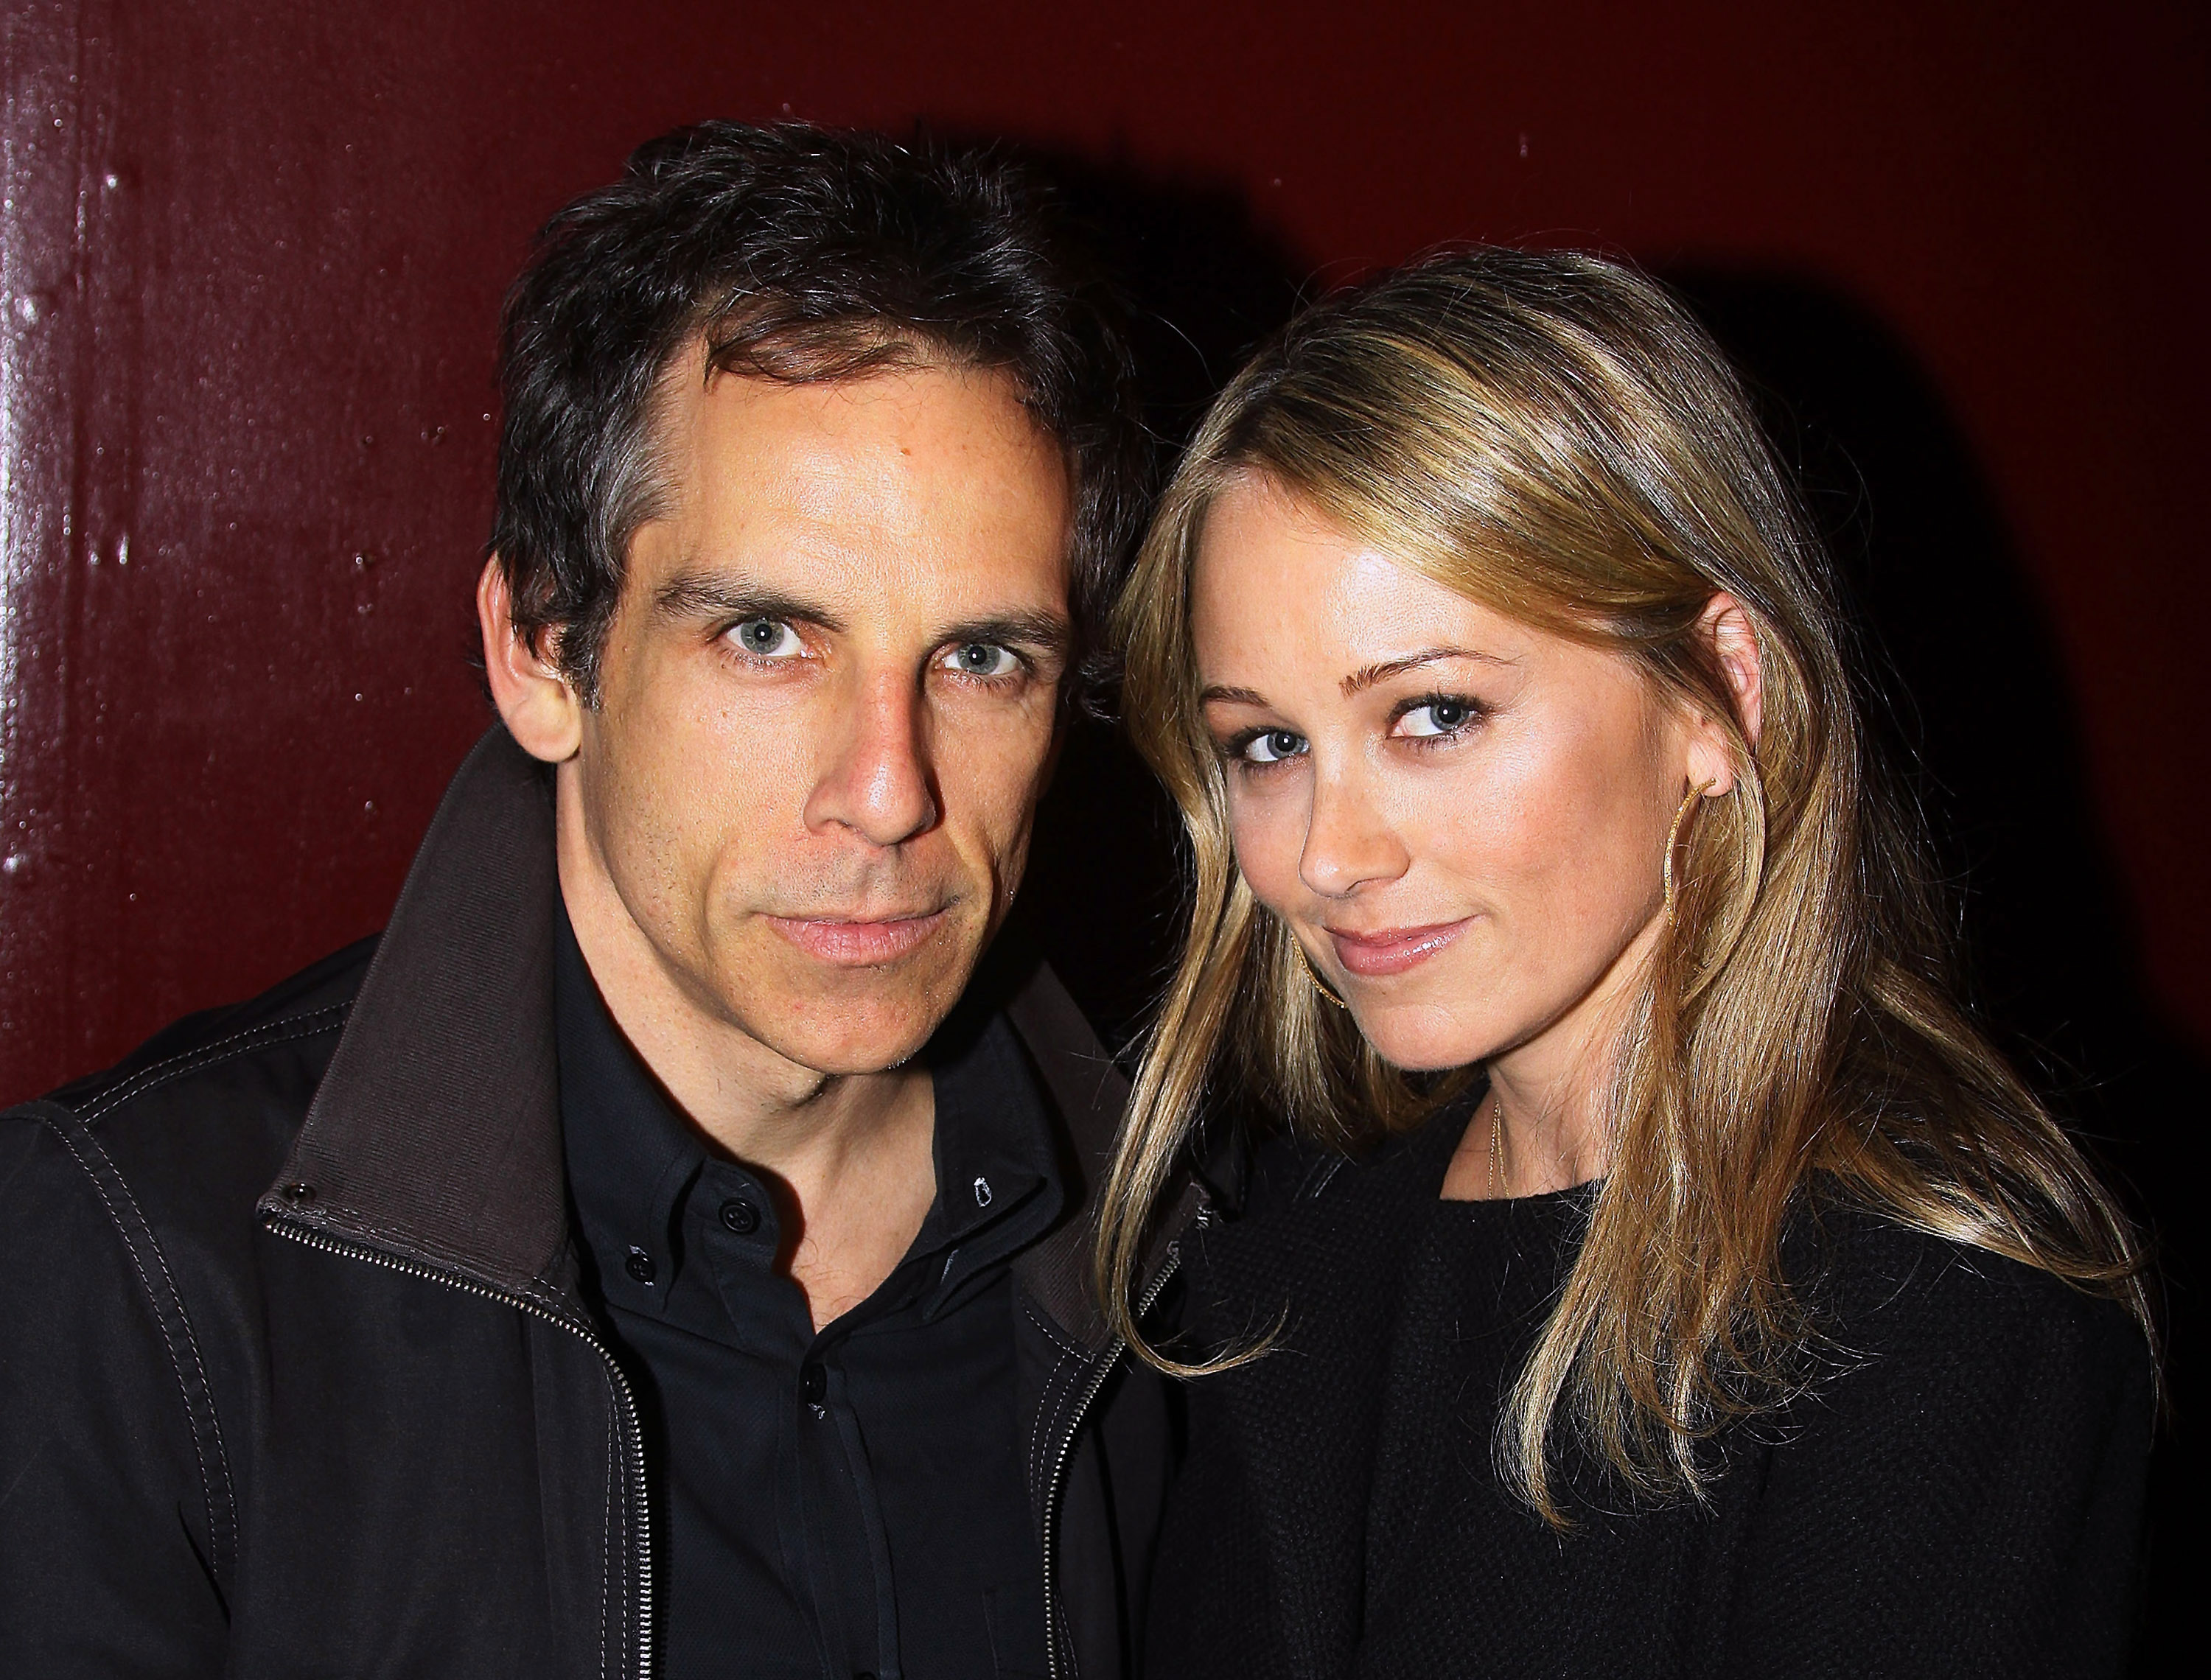 Ben Stiller and Christine Taylor in New York City on November 22, 2010 | Source: Getty Images 